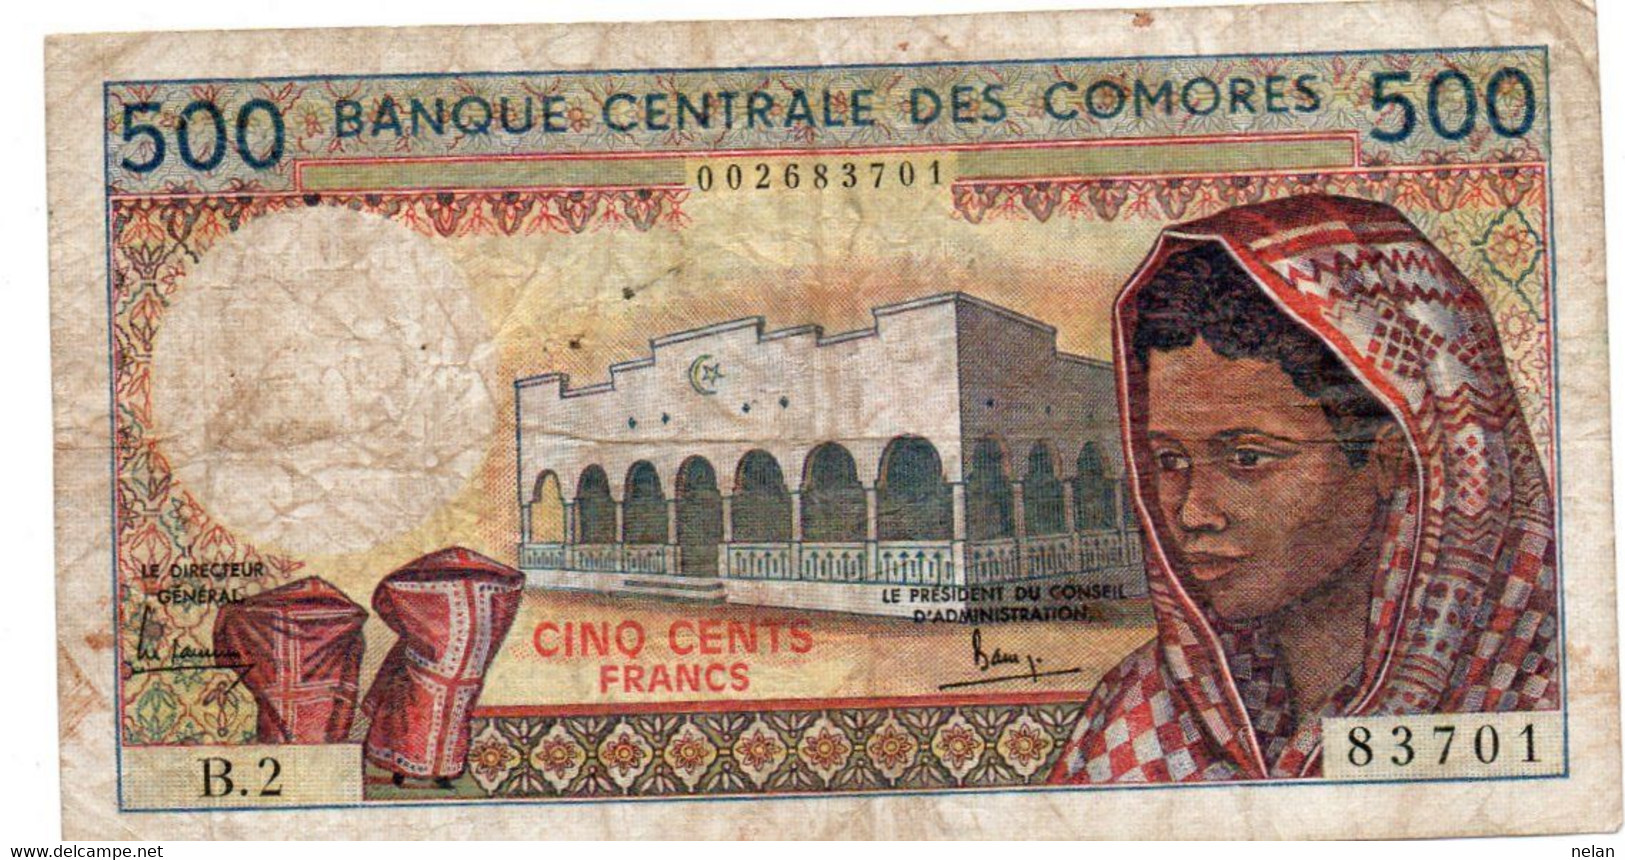 Banque Centrale Des Comoros 500 Francs 1984 P-10 AF+ Anjouan Island - Comores